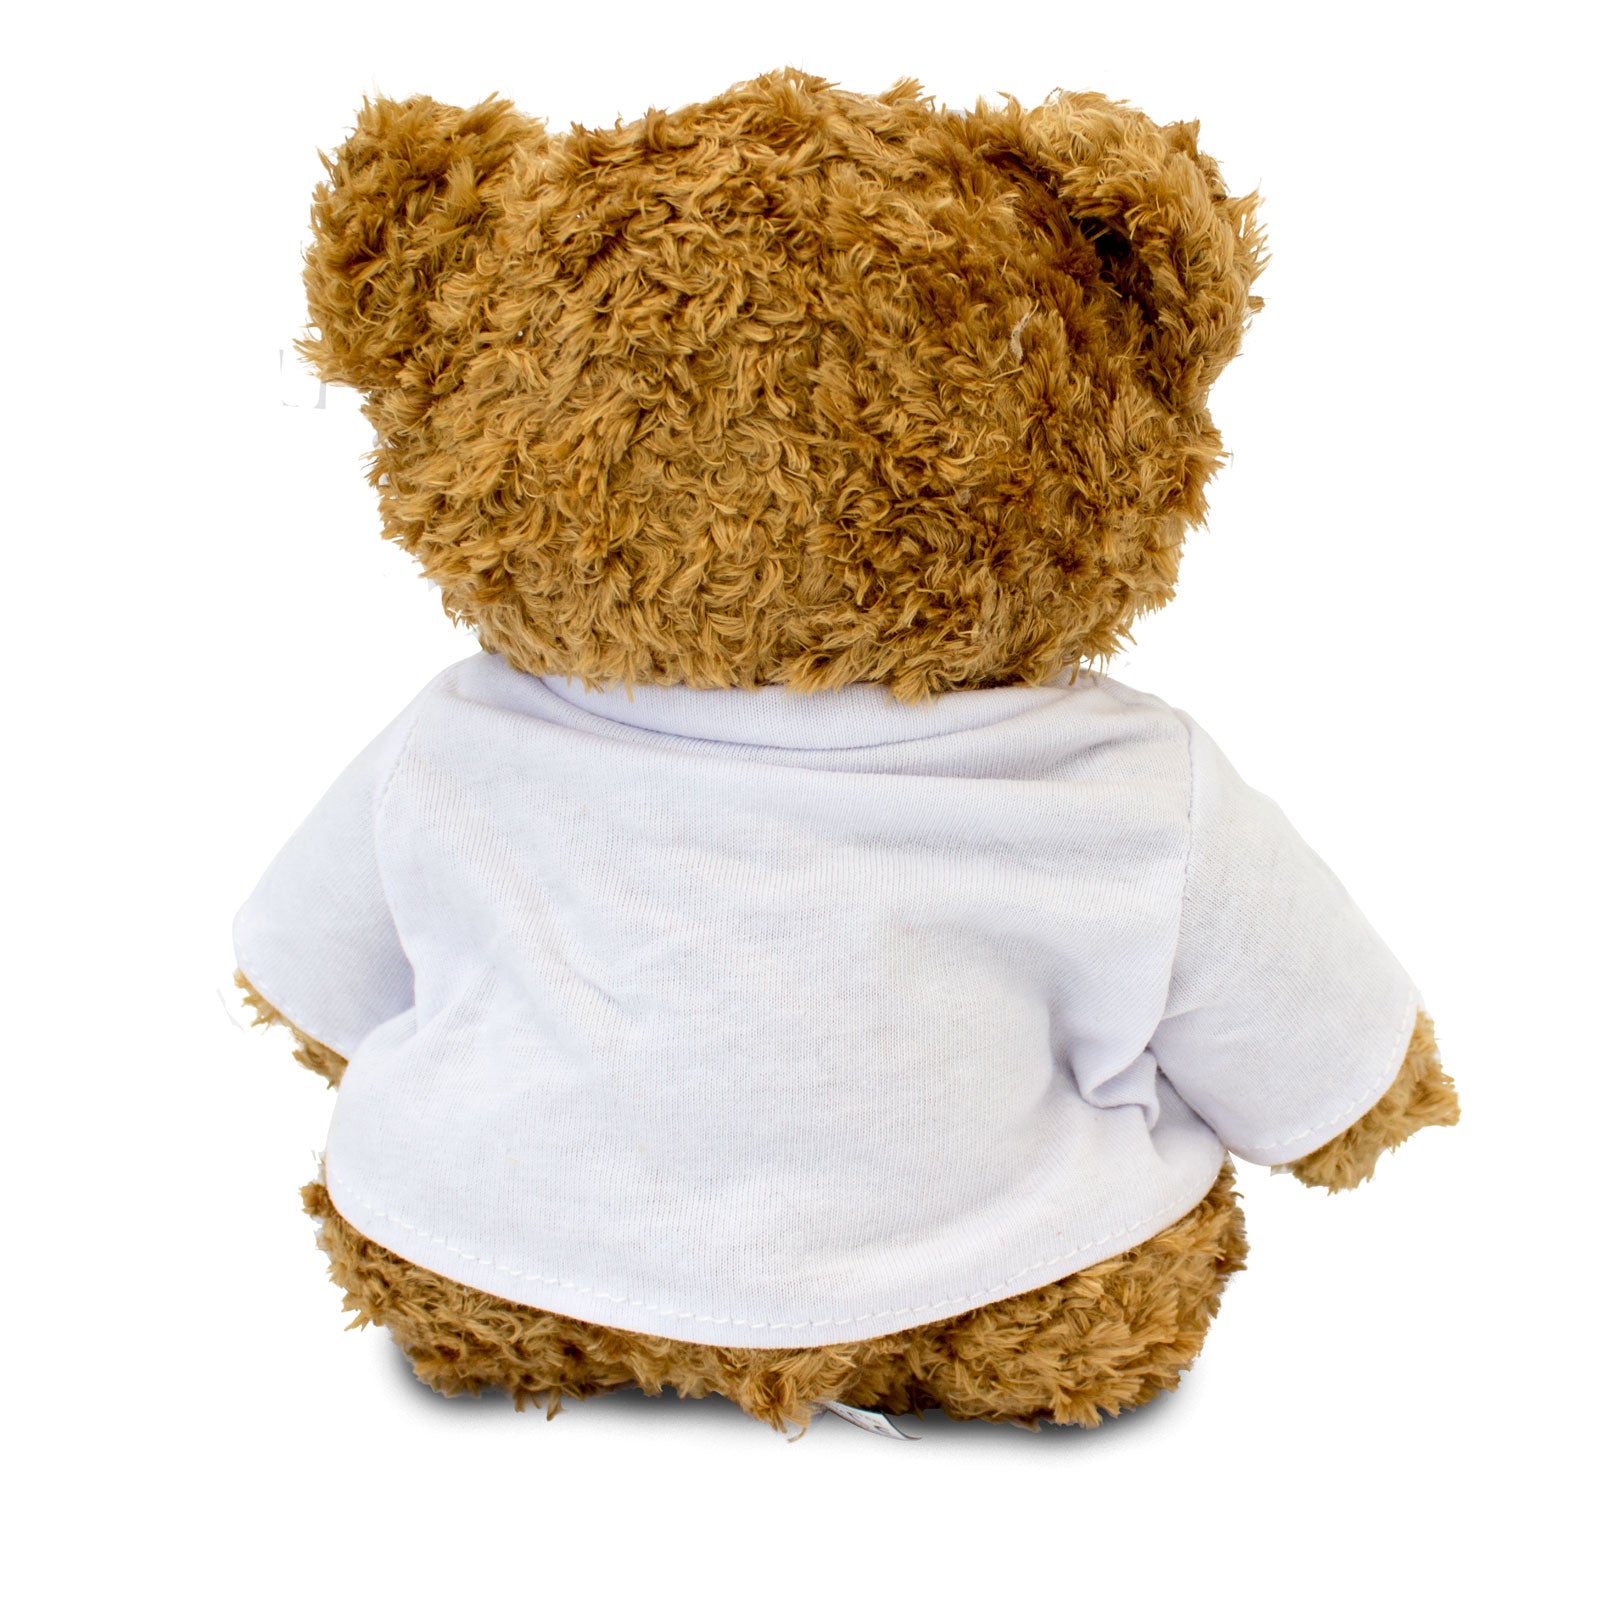 TE QUIERO MUCHO - Teddy Bear - Gift Present